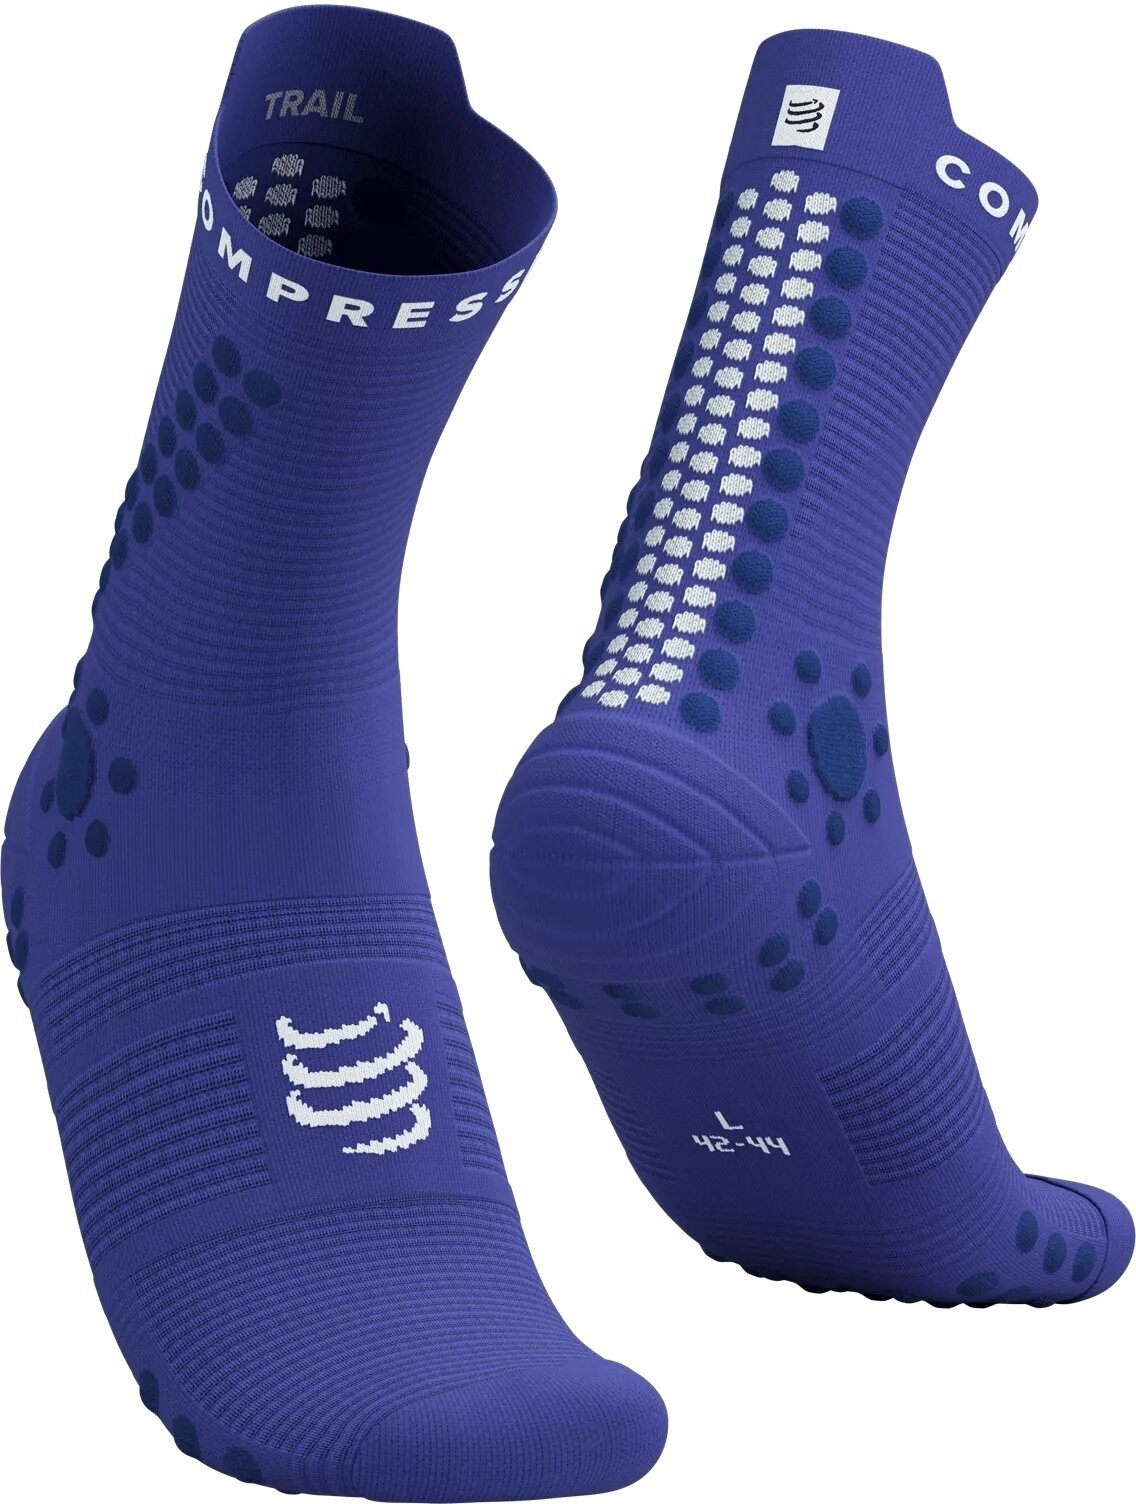 Running socks
 Compressport Pro Racing Socks V4.0 Trail Dazzling Blue/Dress Blues/White T1 Running socks